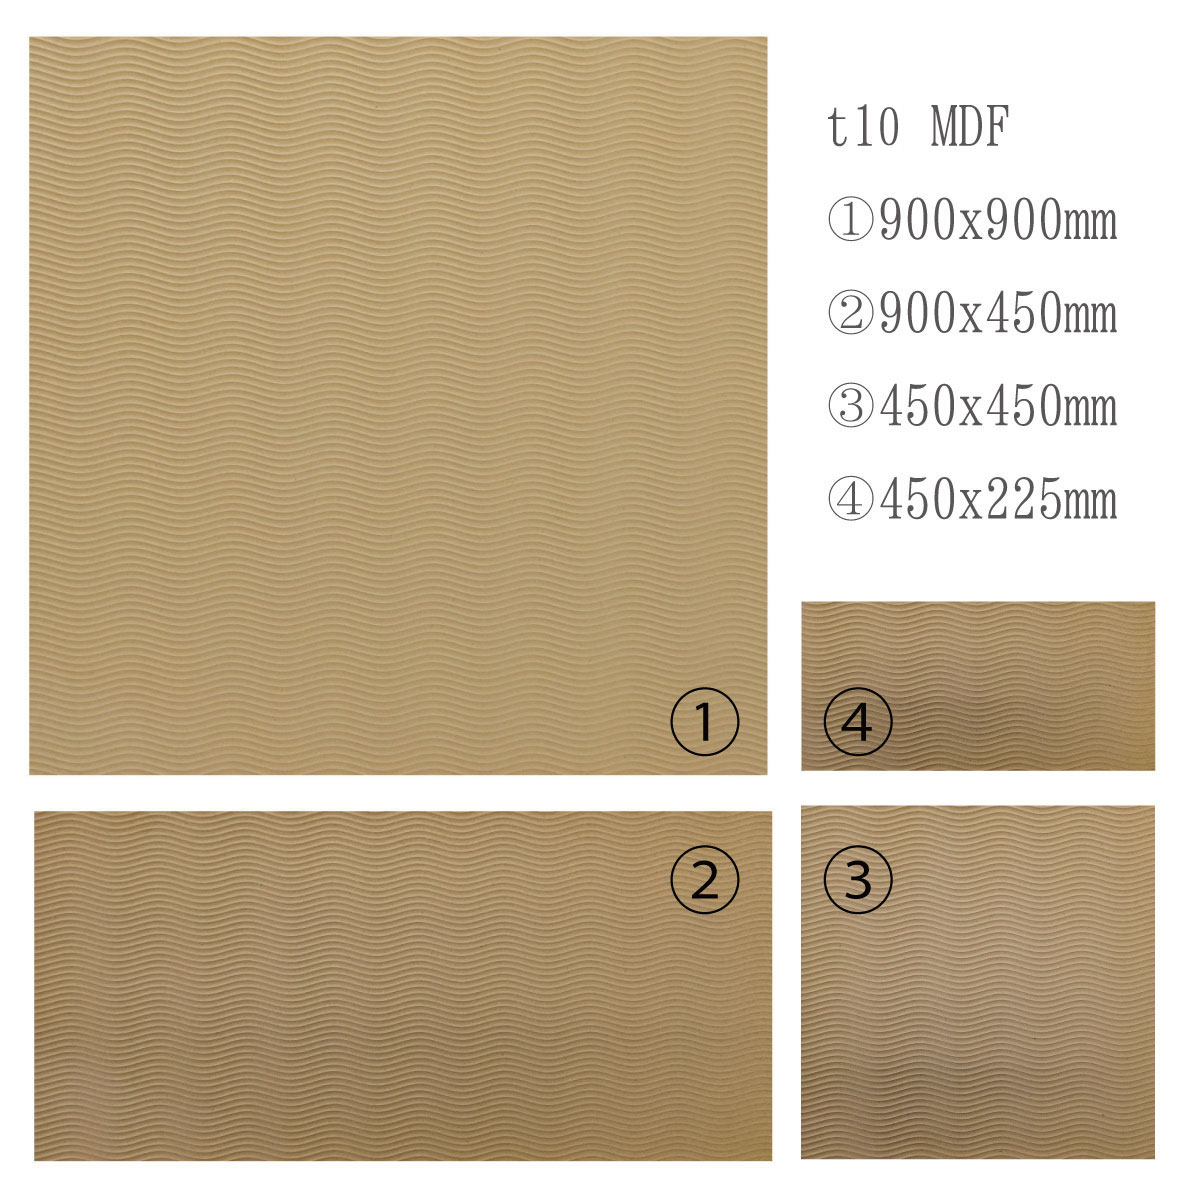 MDF 砂紋 ボード 900x900 10mm厚 木製パネル 画材 ベース材 DIY